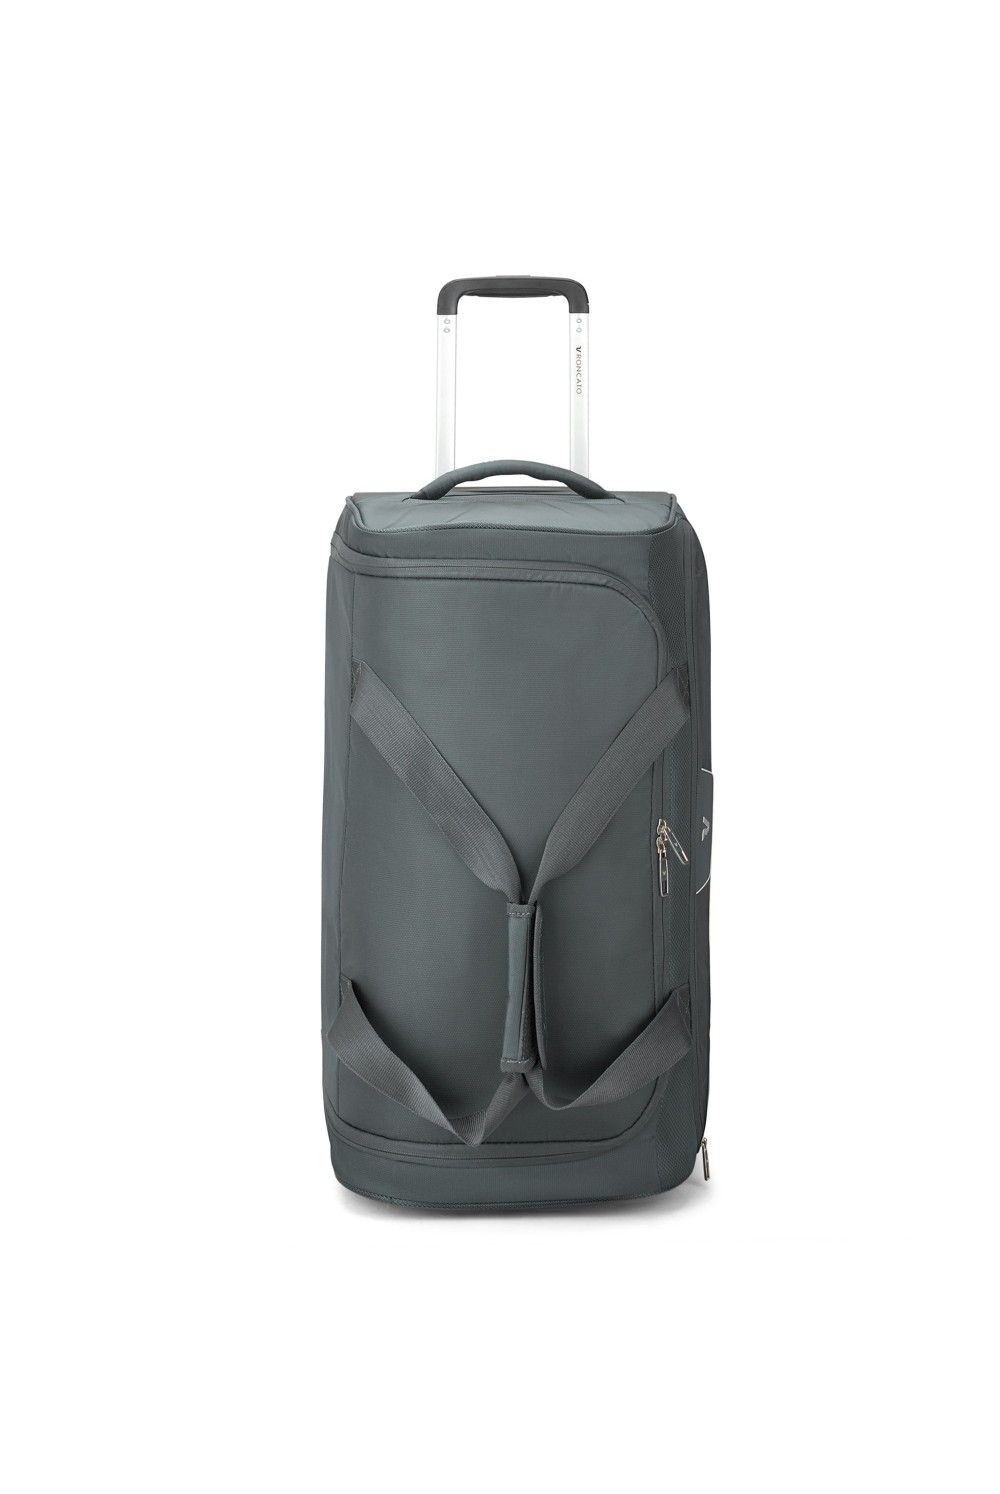 Roncato Joy travel bag 58cm 2 wheel